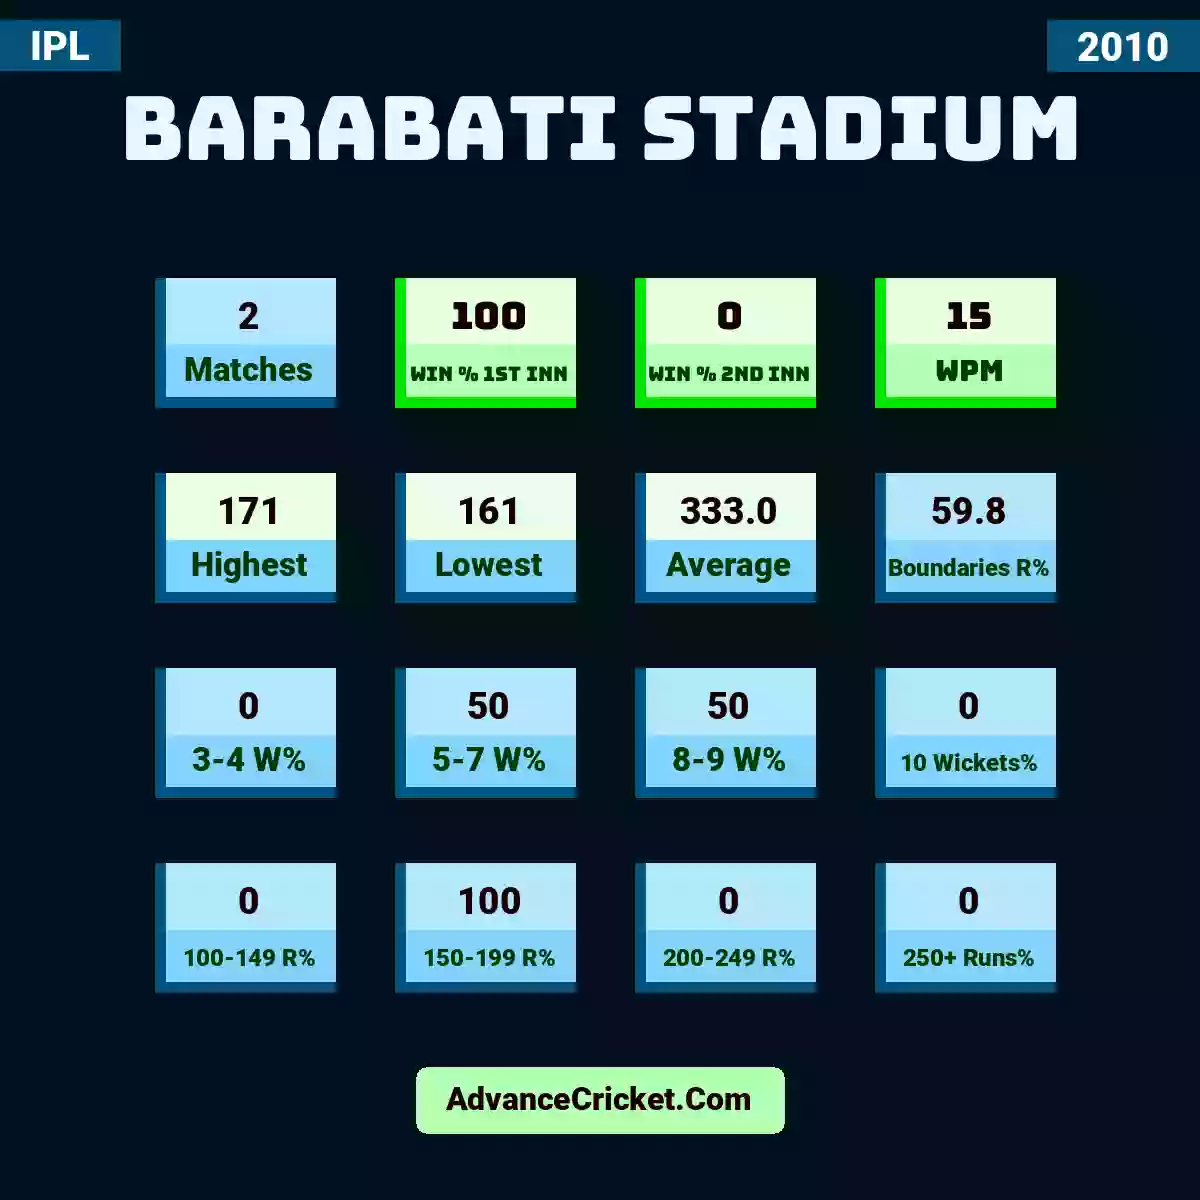 Image showing Barabati Stadium with Matches: 2, Win % 1st Inn: 100, Win % 2nd Inn: 0, WPM: 15, Highest: 171, Lowest: 161, Average: 333.0, Boundaries R%: 59.8, 3-4 W%: 0, 5-7 W%: 50, 8-9 W%: 50, 10 Wickets%: 0, 100-149 R%: 0, 150-199 R%: 100, 200-249 R%: 0, 250+ Runs%: 0.